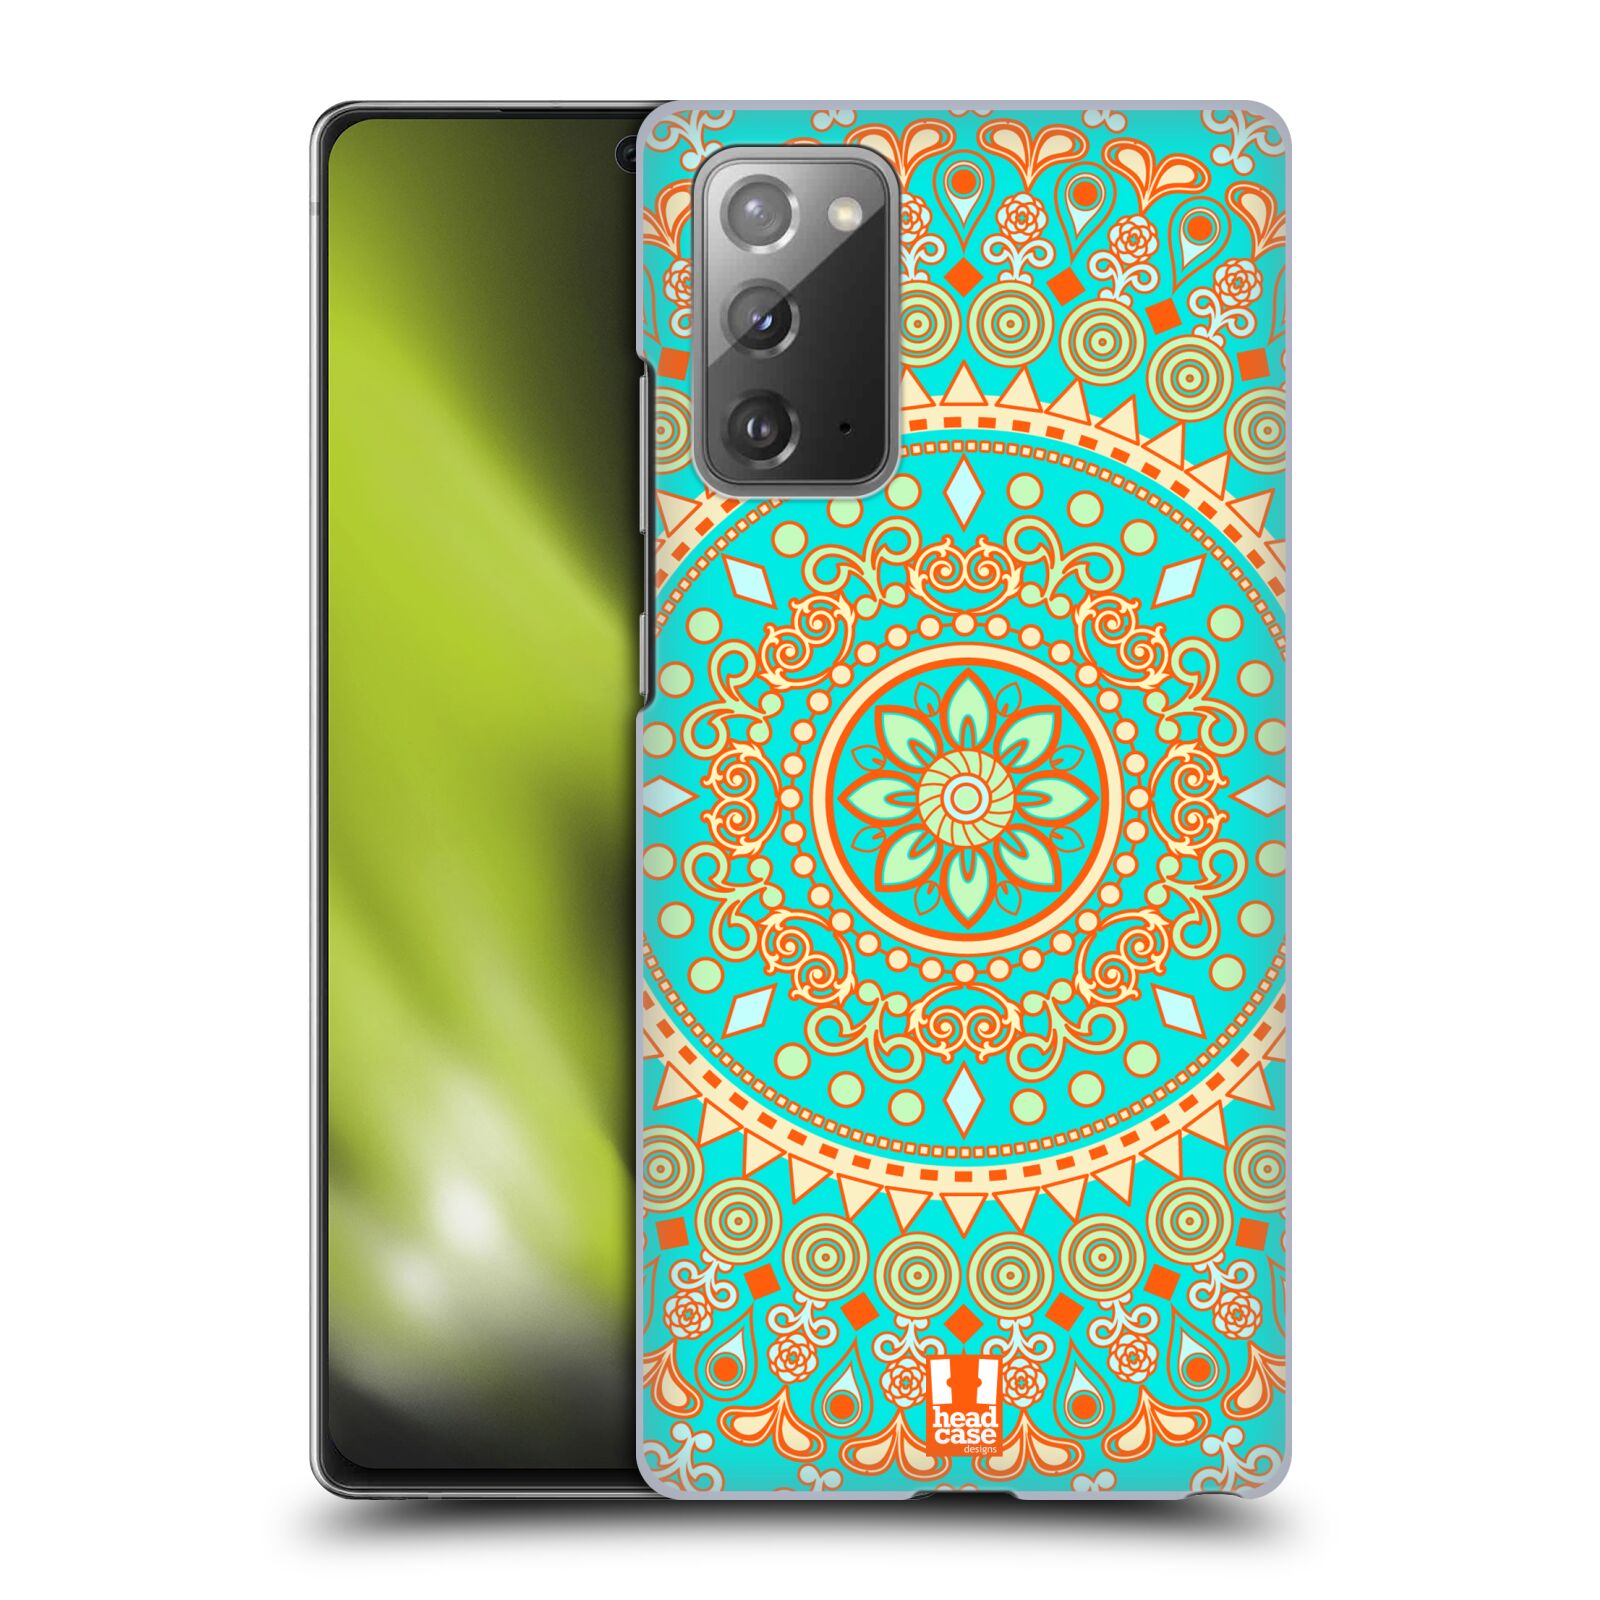 Plastový obal HEAD CASE na mobil Samsung Galaxy Note 20 vzor Indie Mandala slunce barevný motiv TYRKYSOVÁ, ZELENÁ